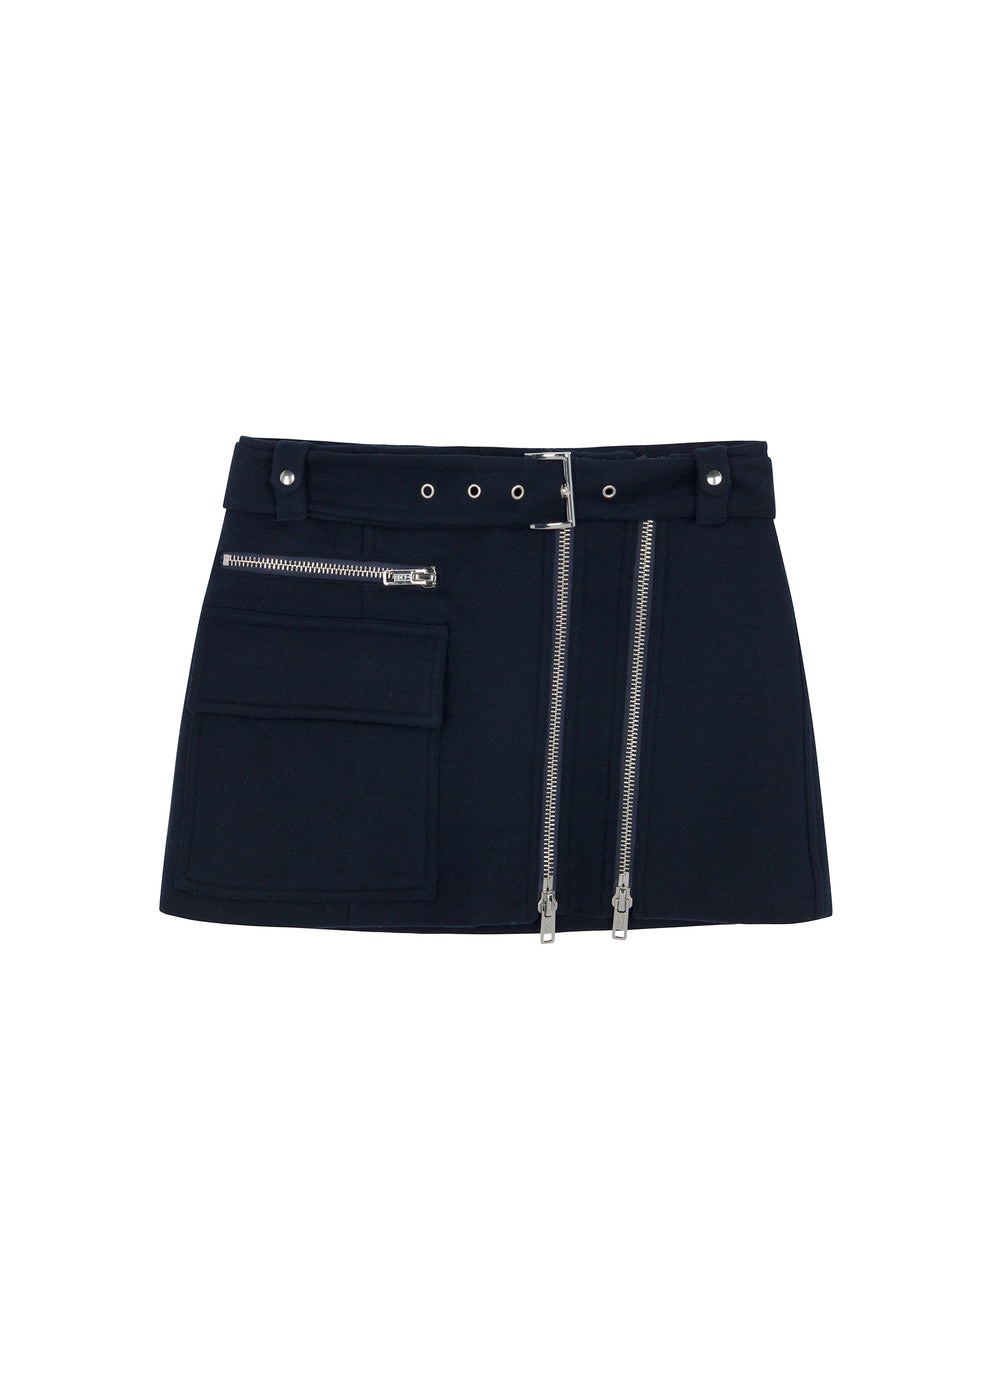 flatlay of navy blue skirt with zipper detailing 